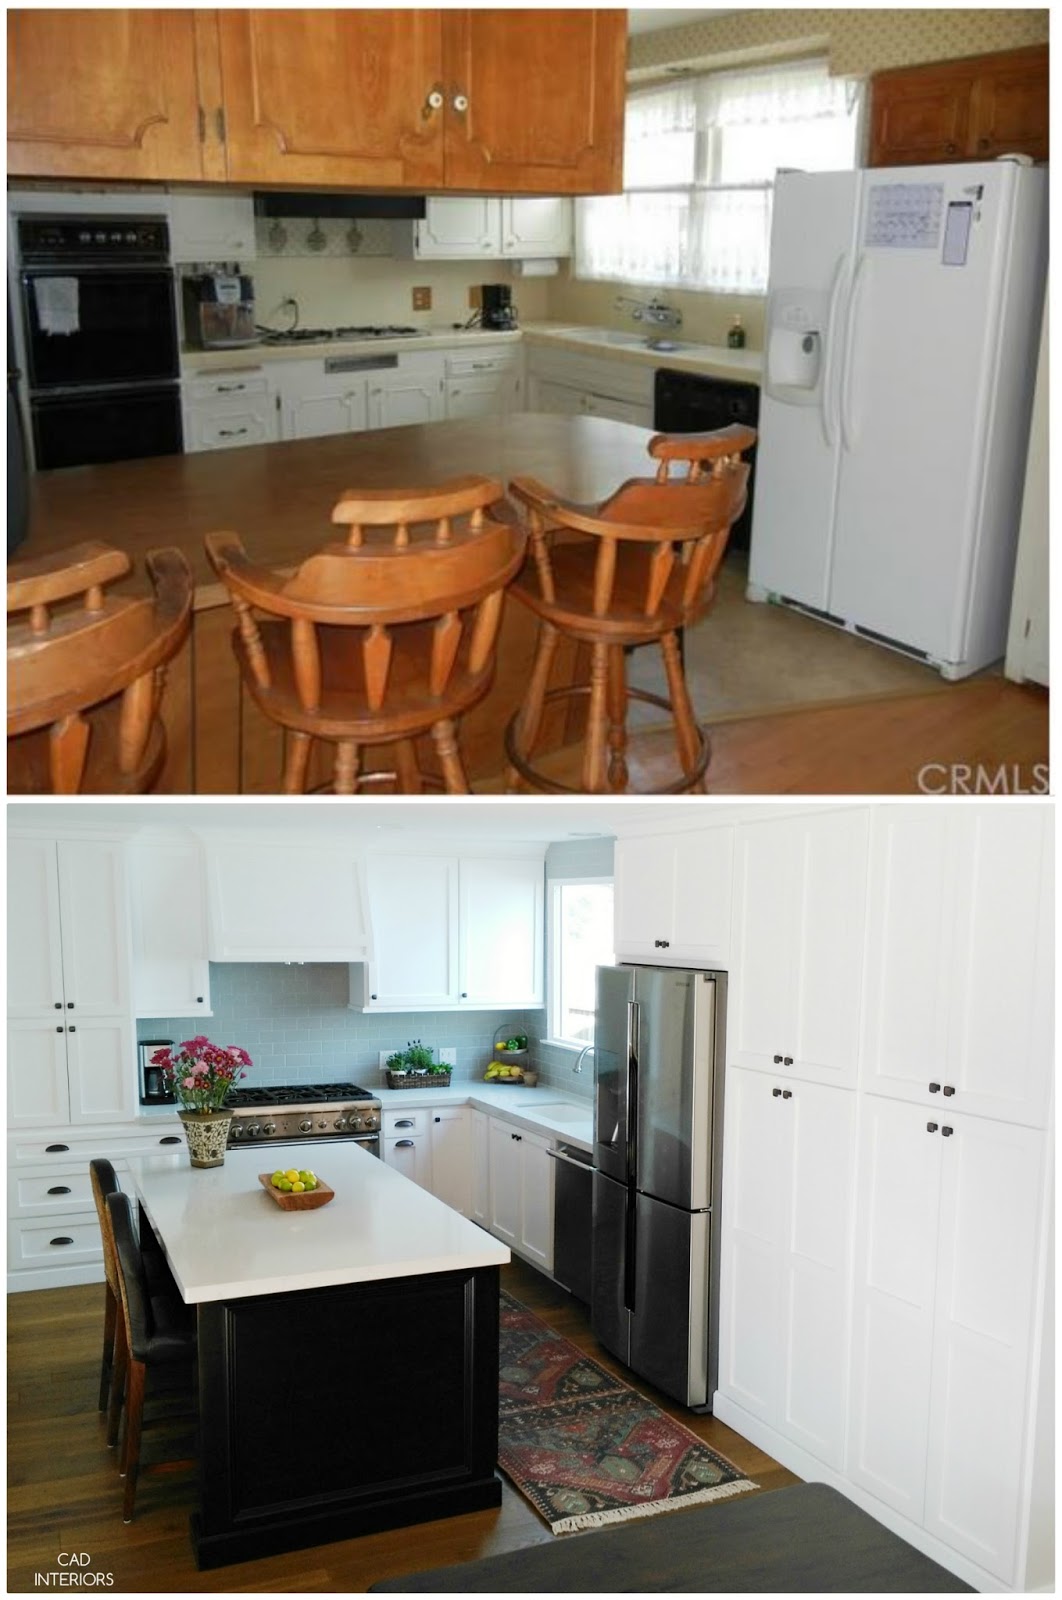 CAD INTERIORS kitchen renovation home improvement interior design